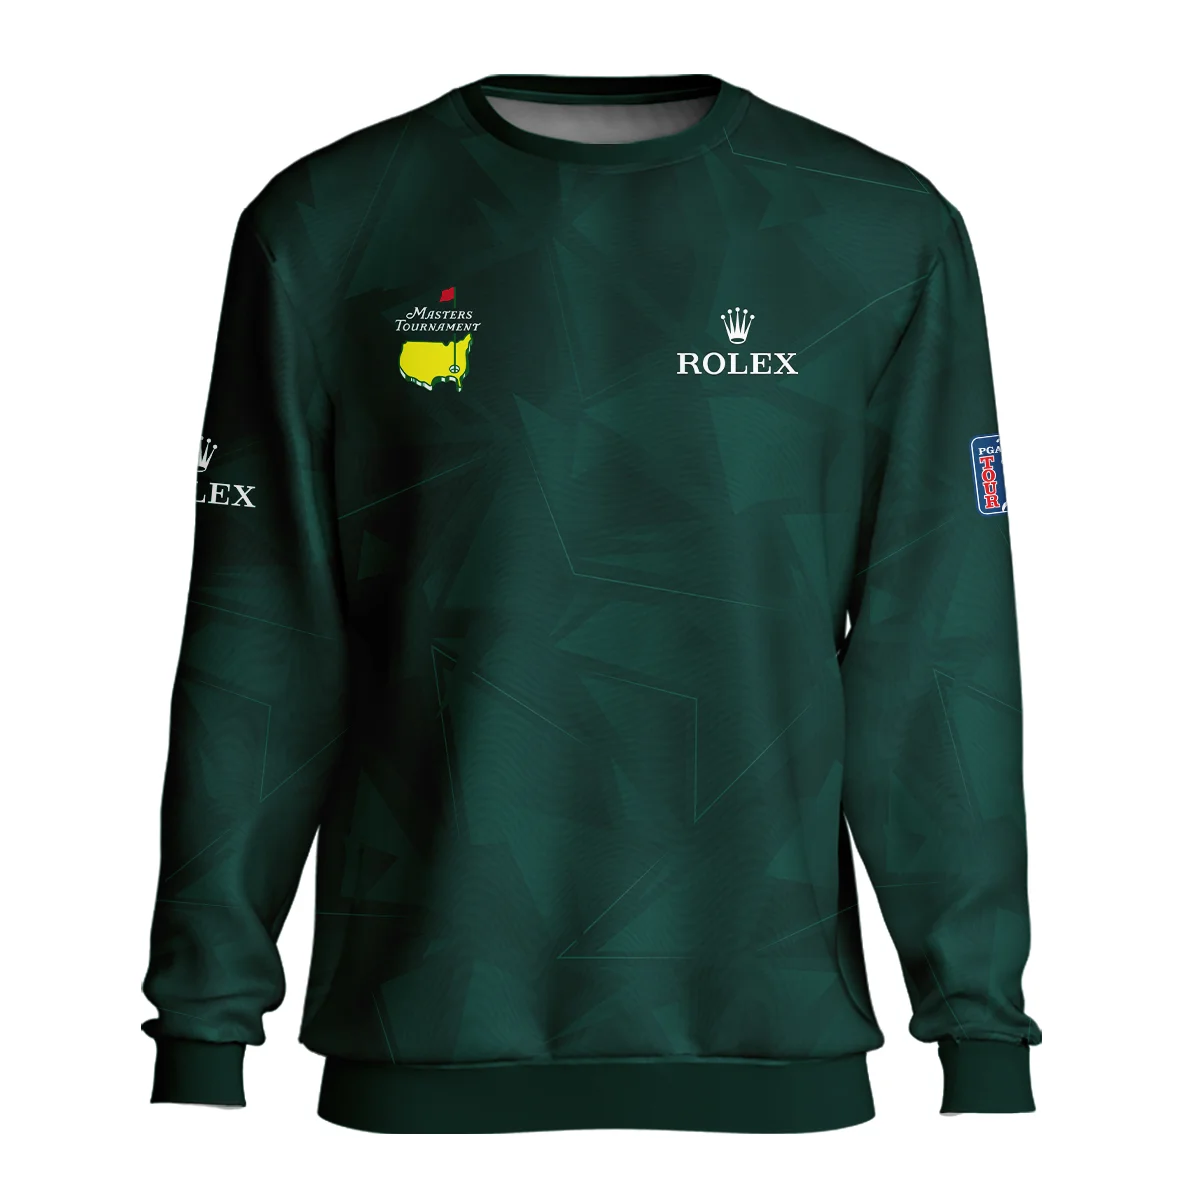 Dark Green Abstract Sport Masters Tournament Rolex Sleeveless Jacket Style Classic Sleeveless Jacket